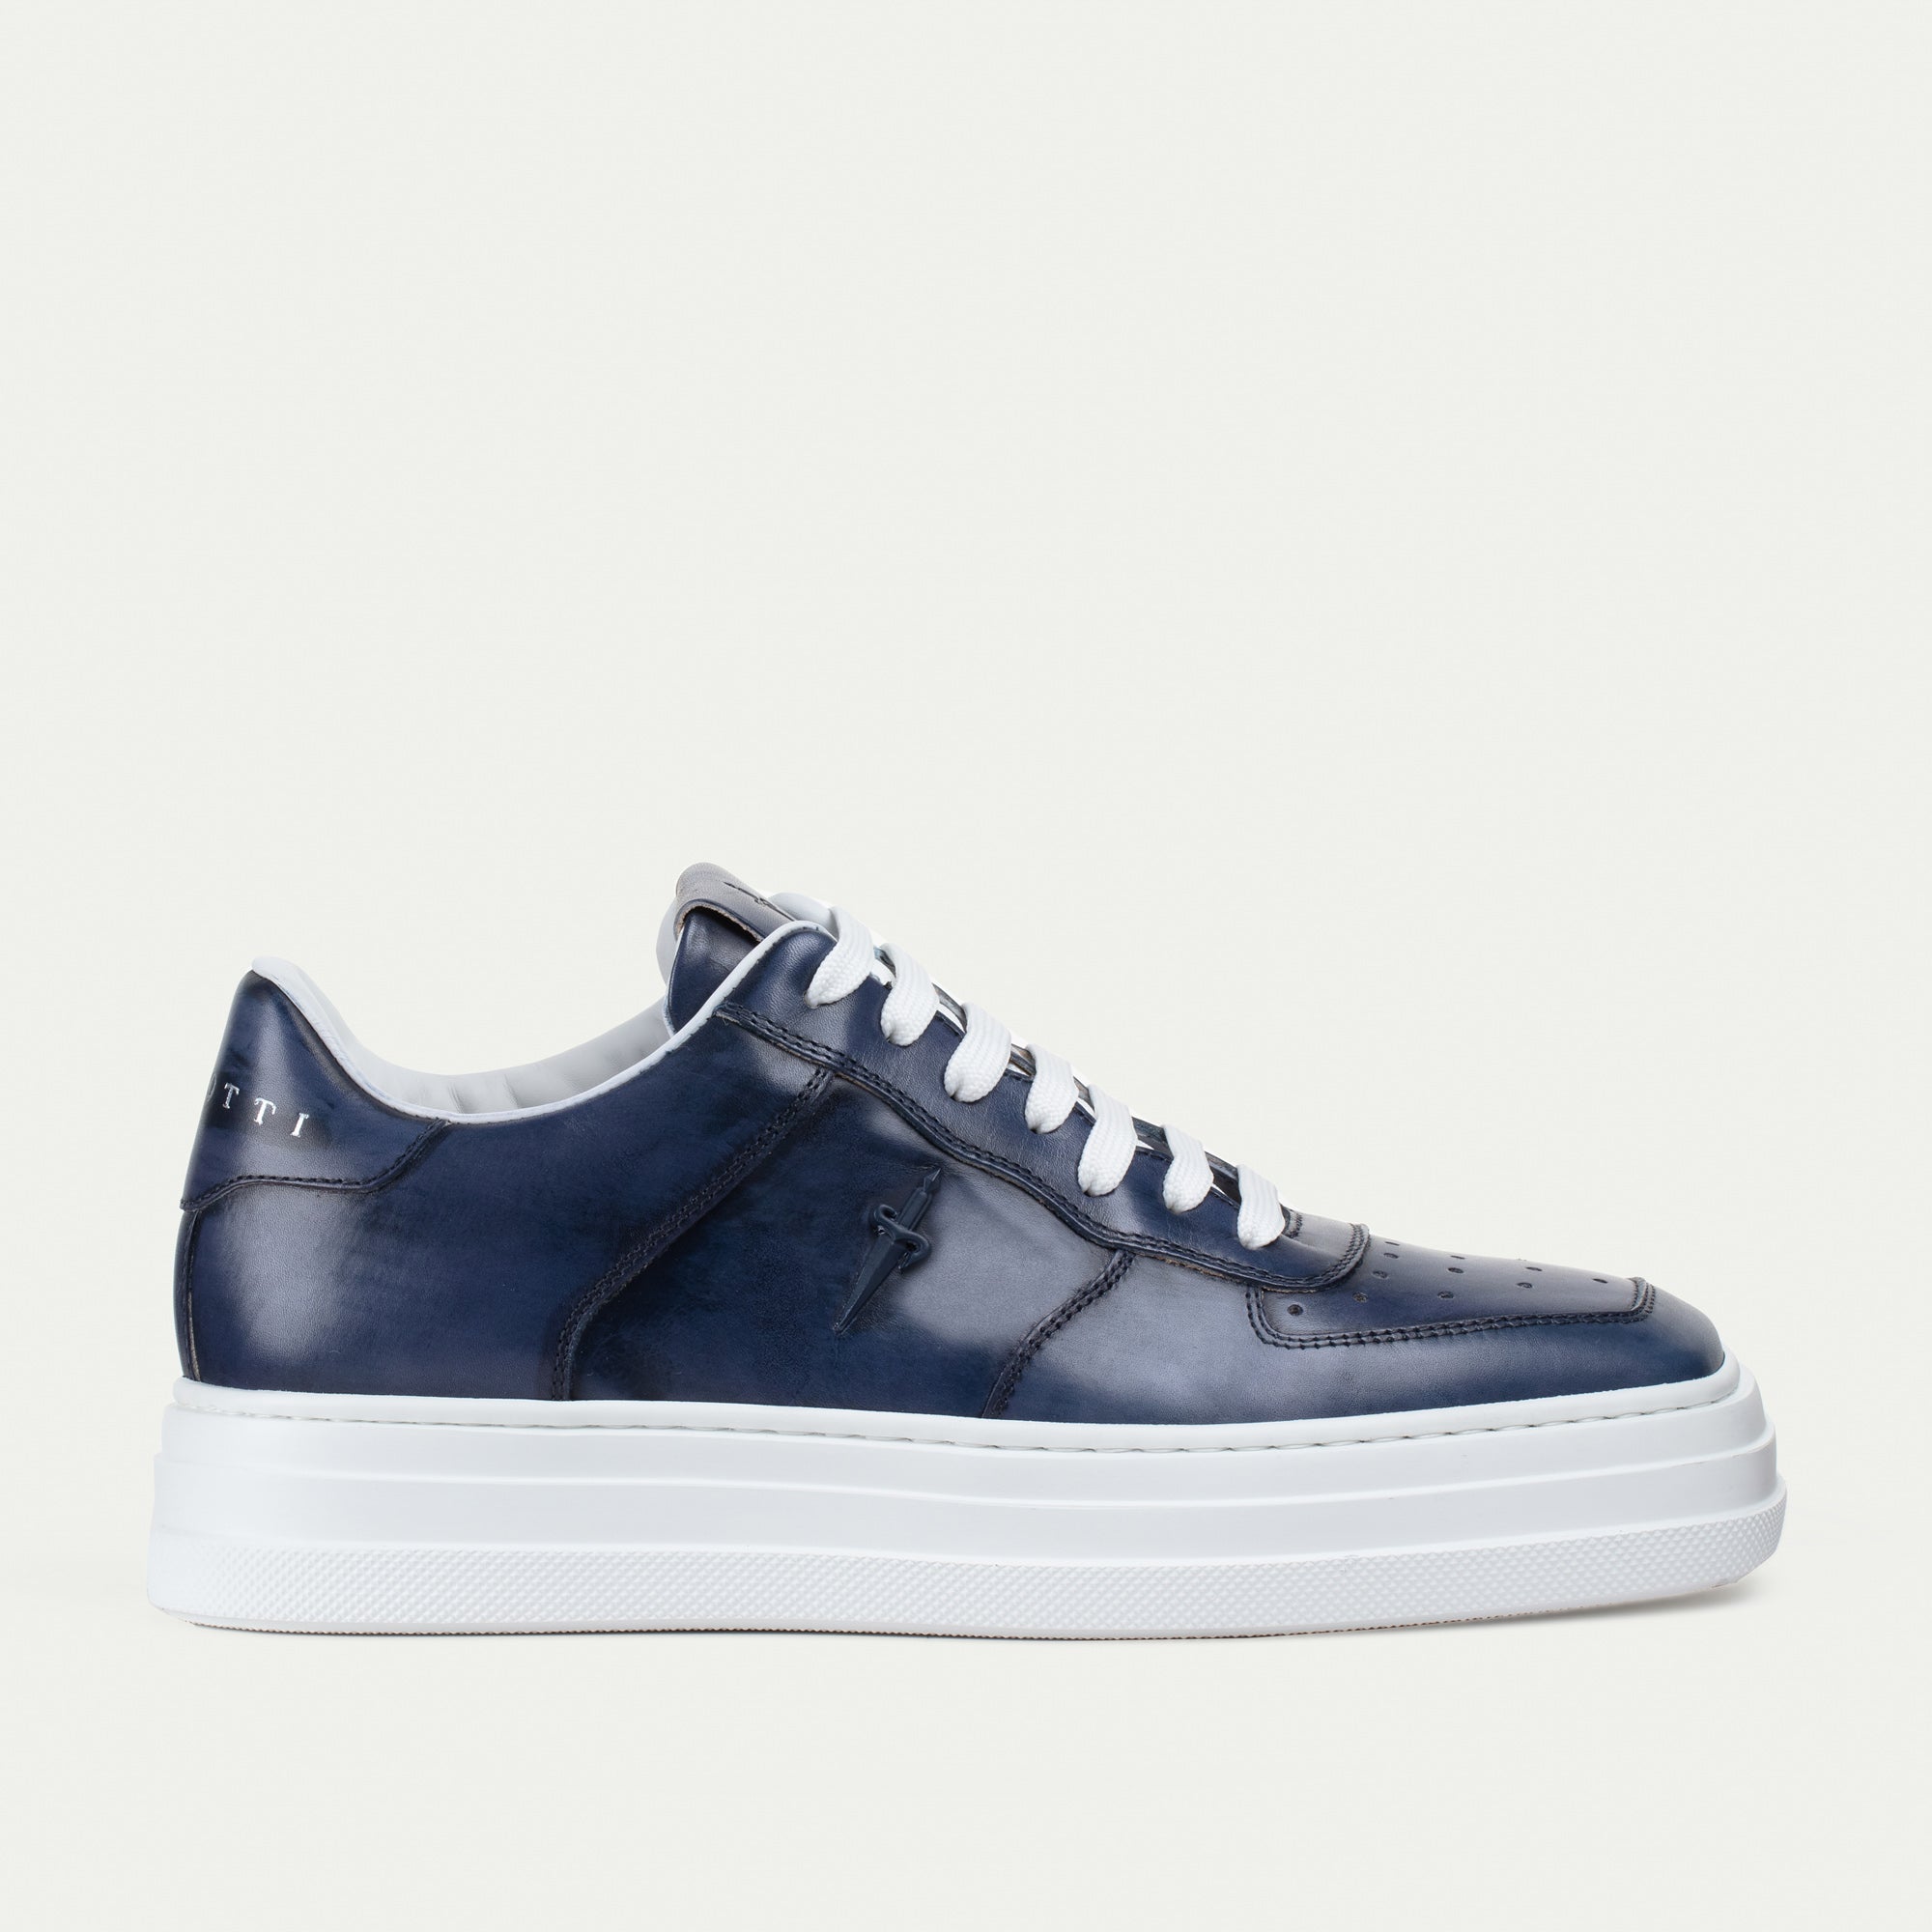 Louis Vuitton Beverly Hills Sneaker Mocha. Size 05.0